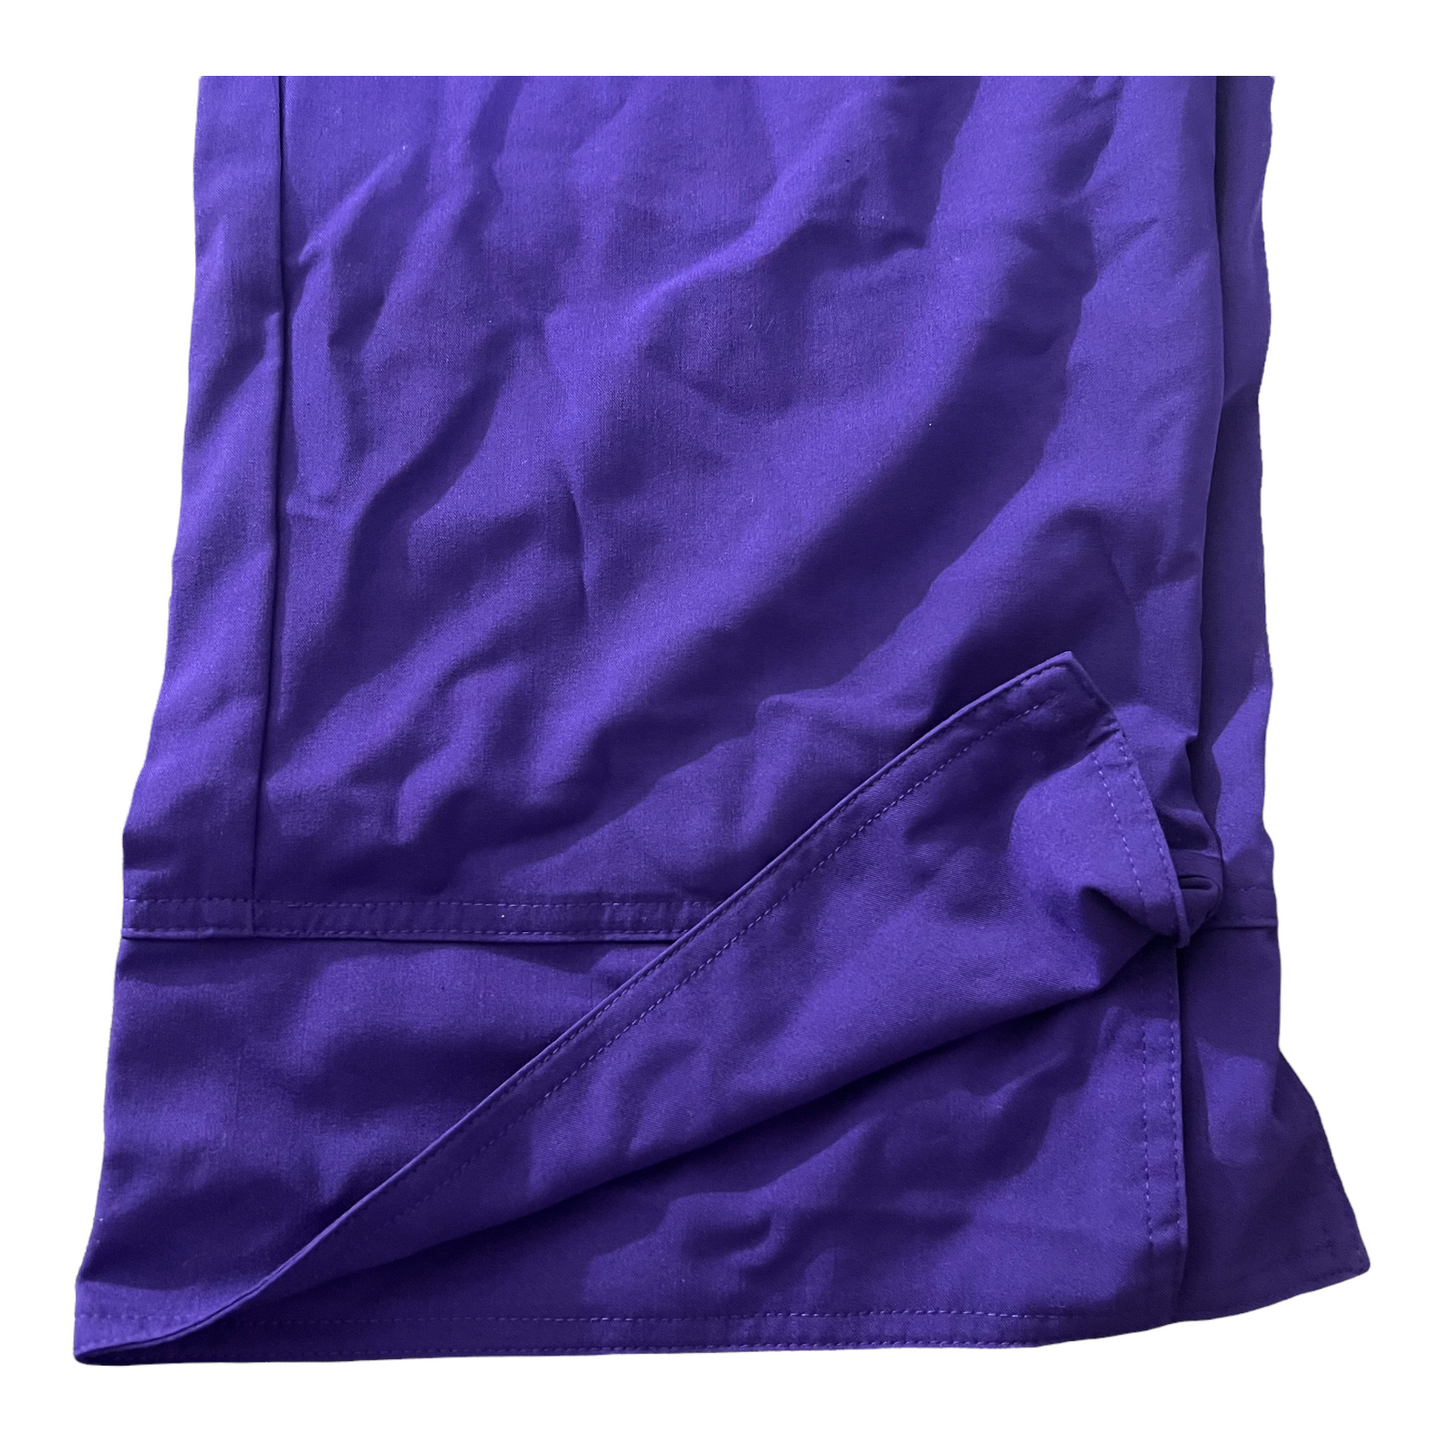 NEW Purple Grey's Anatomy Scrubs w/Drawstring Closure